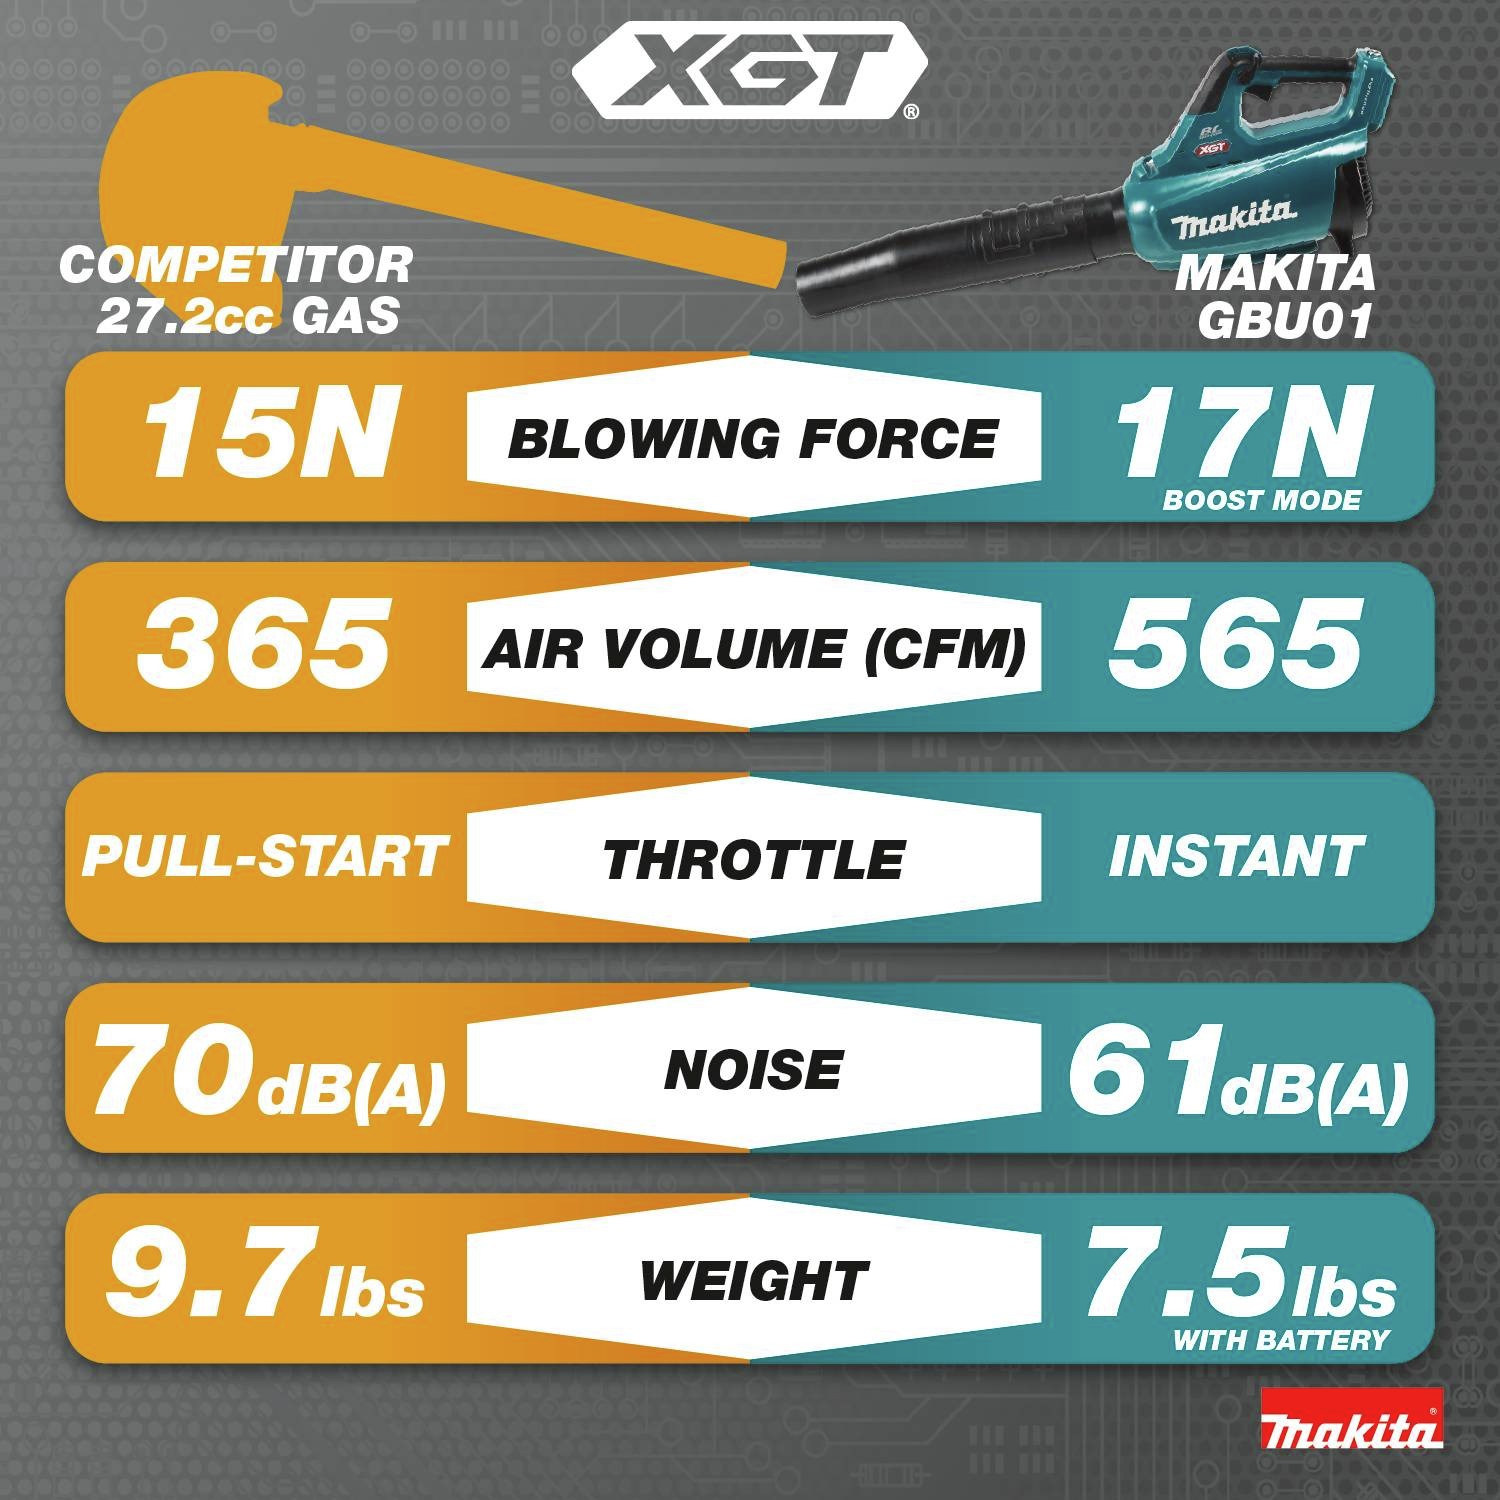 Competitor 27.2cc Gas vs Makita GBU01